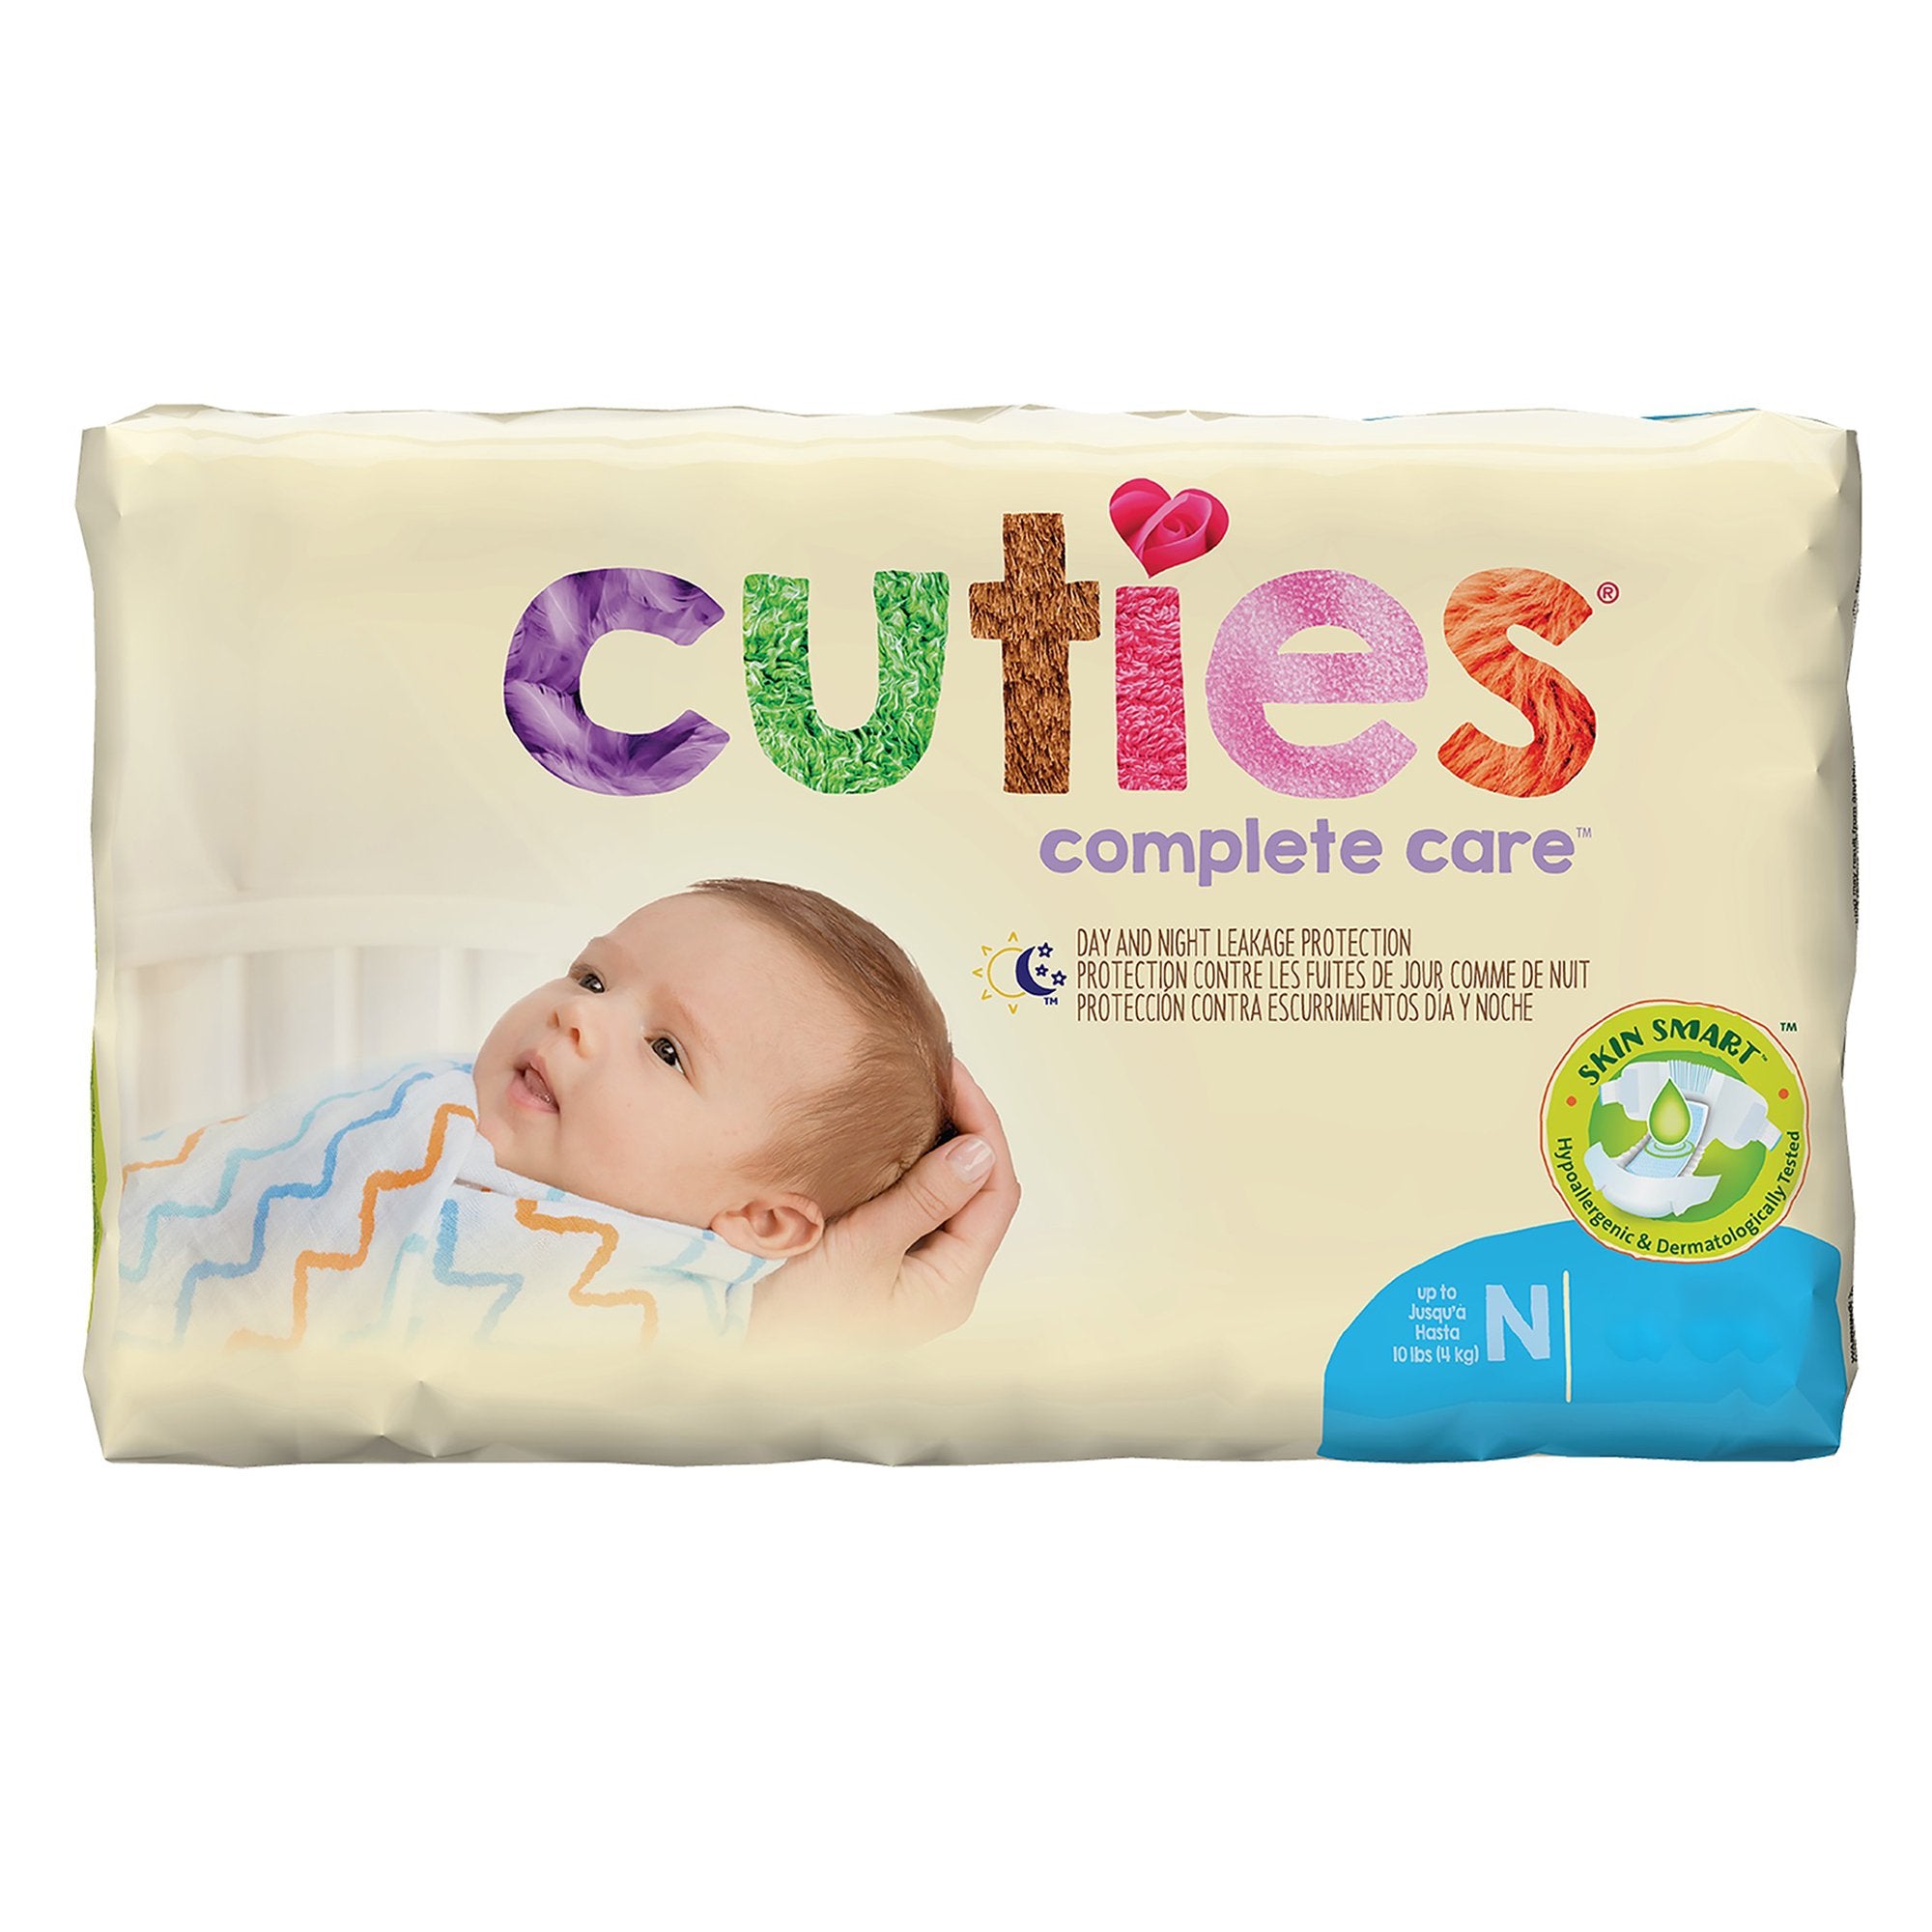 Cuties Complete Care Diapers, Newborn